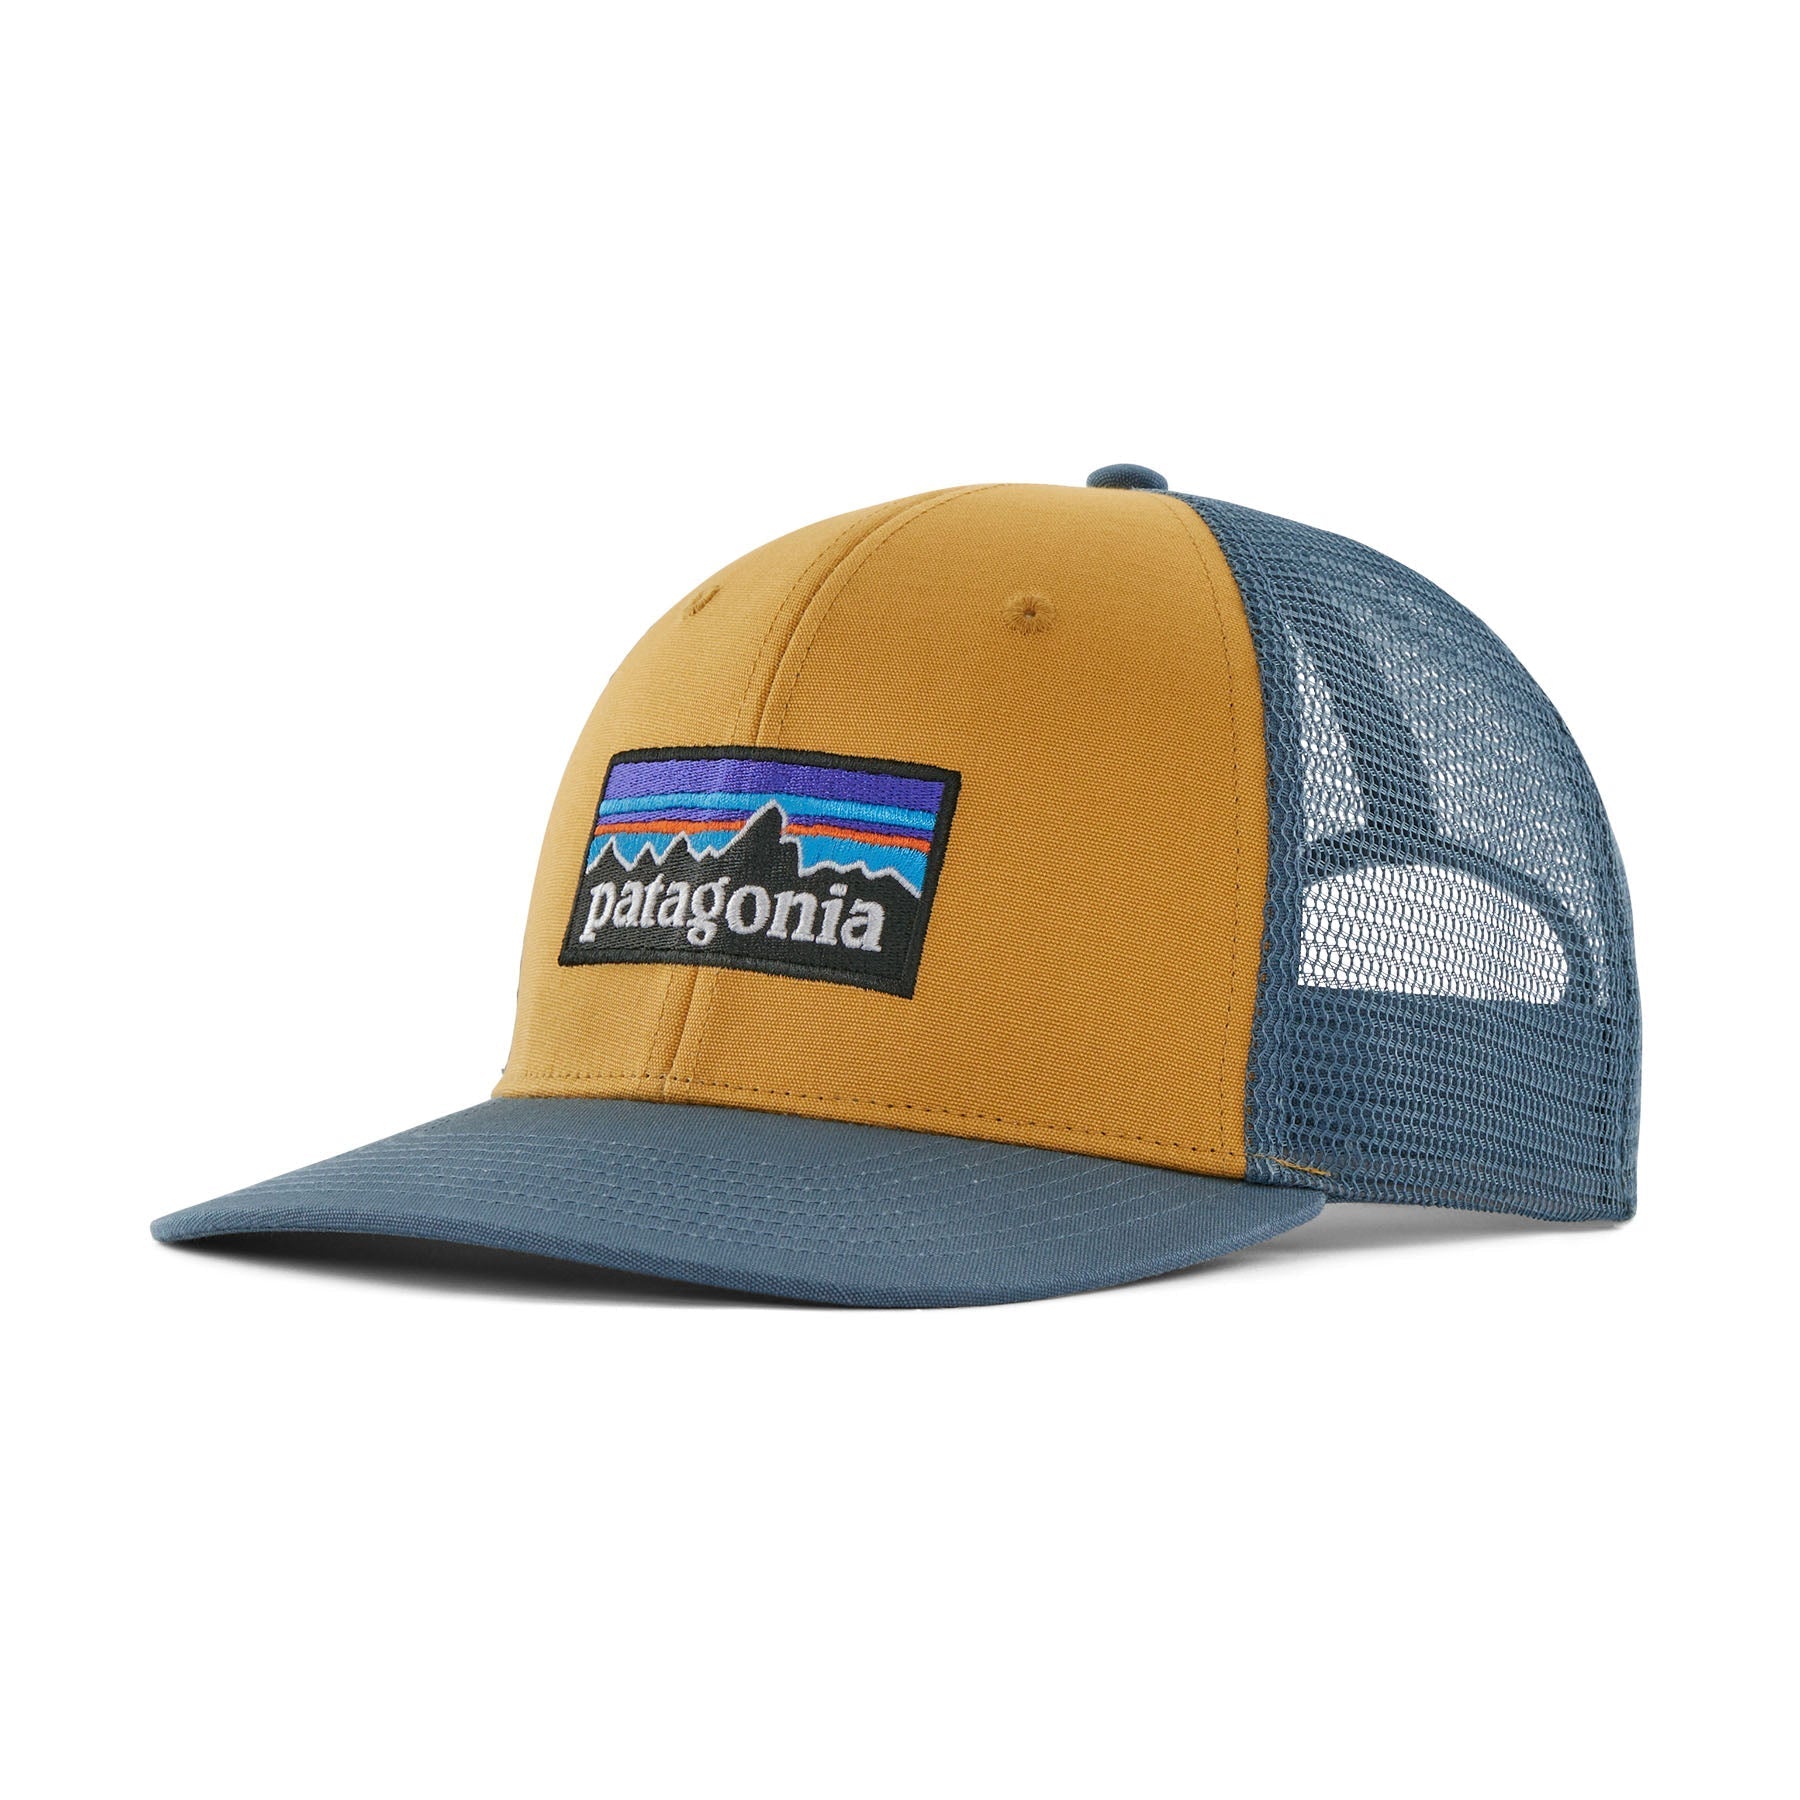 P - 6 Logo Trucker Hat in Pufferfish Gold | Patagonia Bend